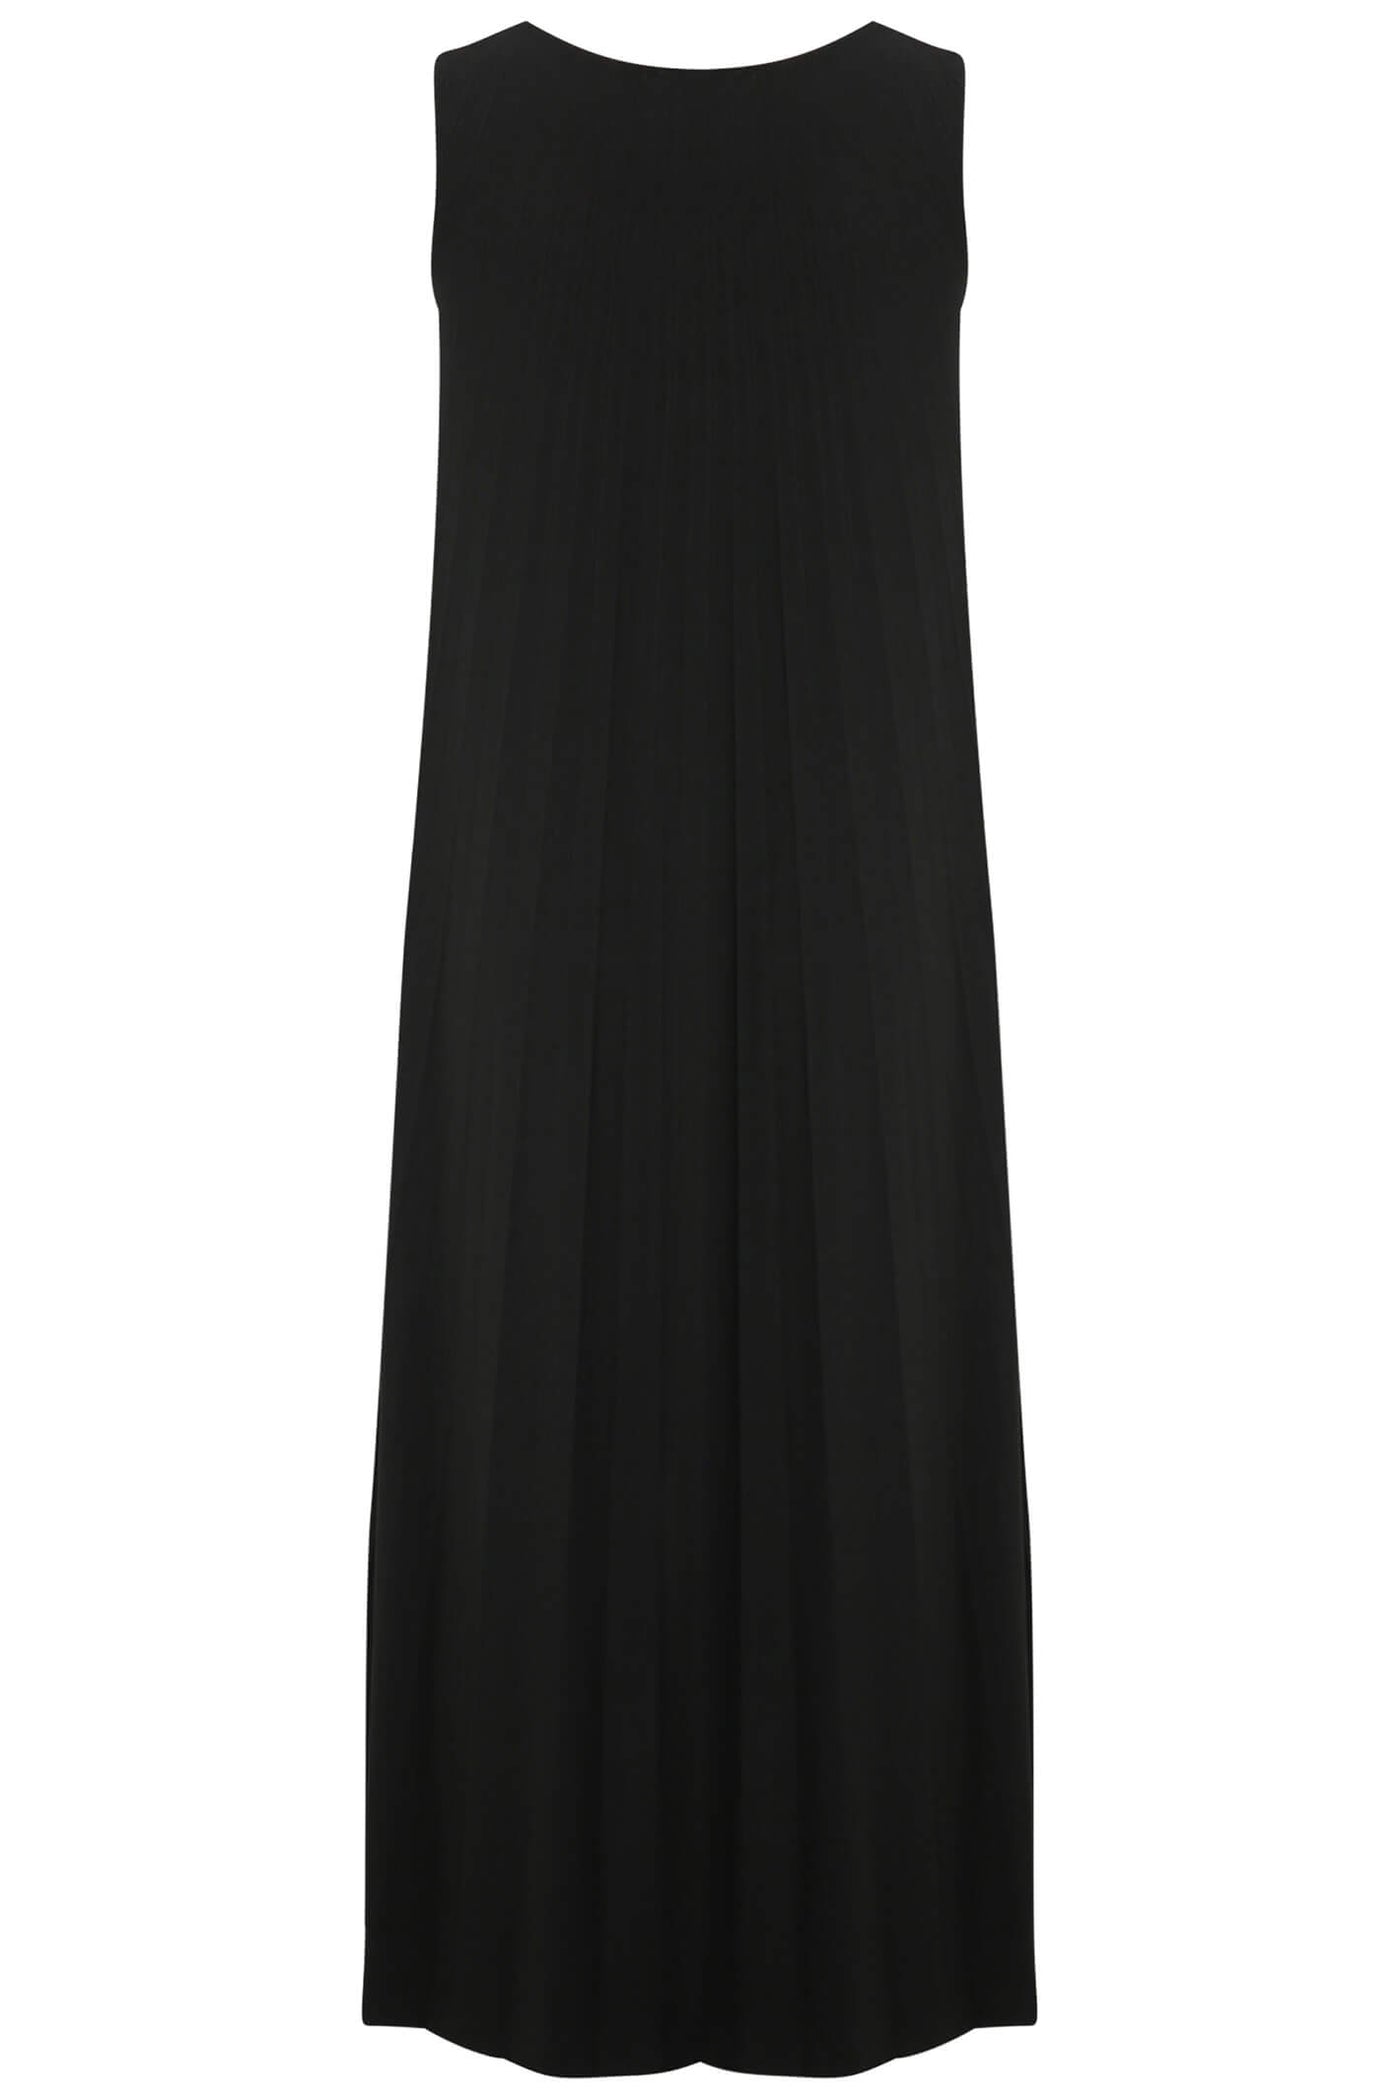 Doris Streich 680 186 Black Pleated High-Low Hem Sleeveless Dress - Rouge Boutique